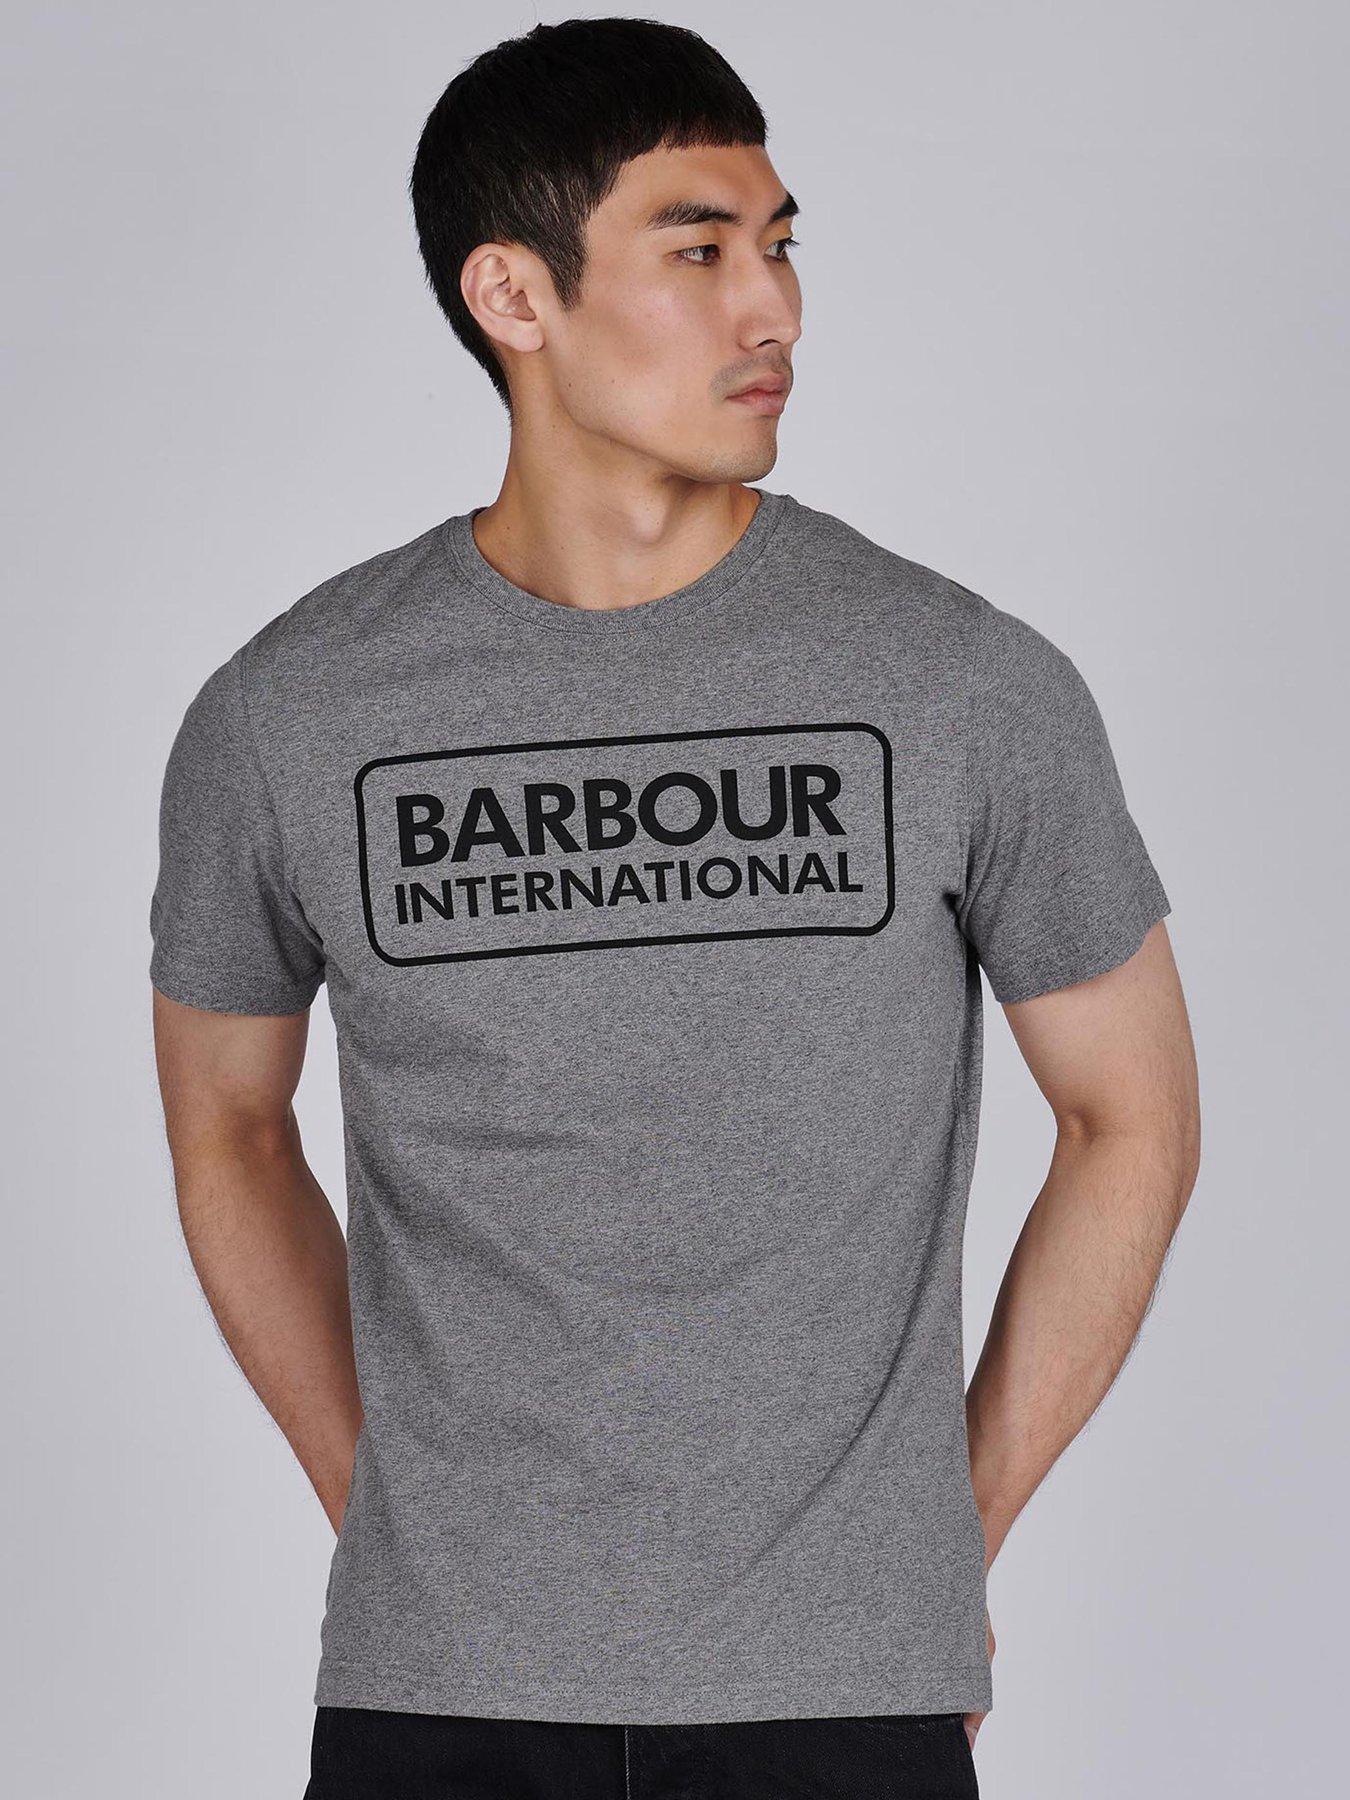 barbour international t shirt sale